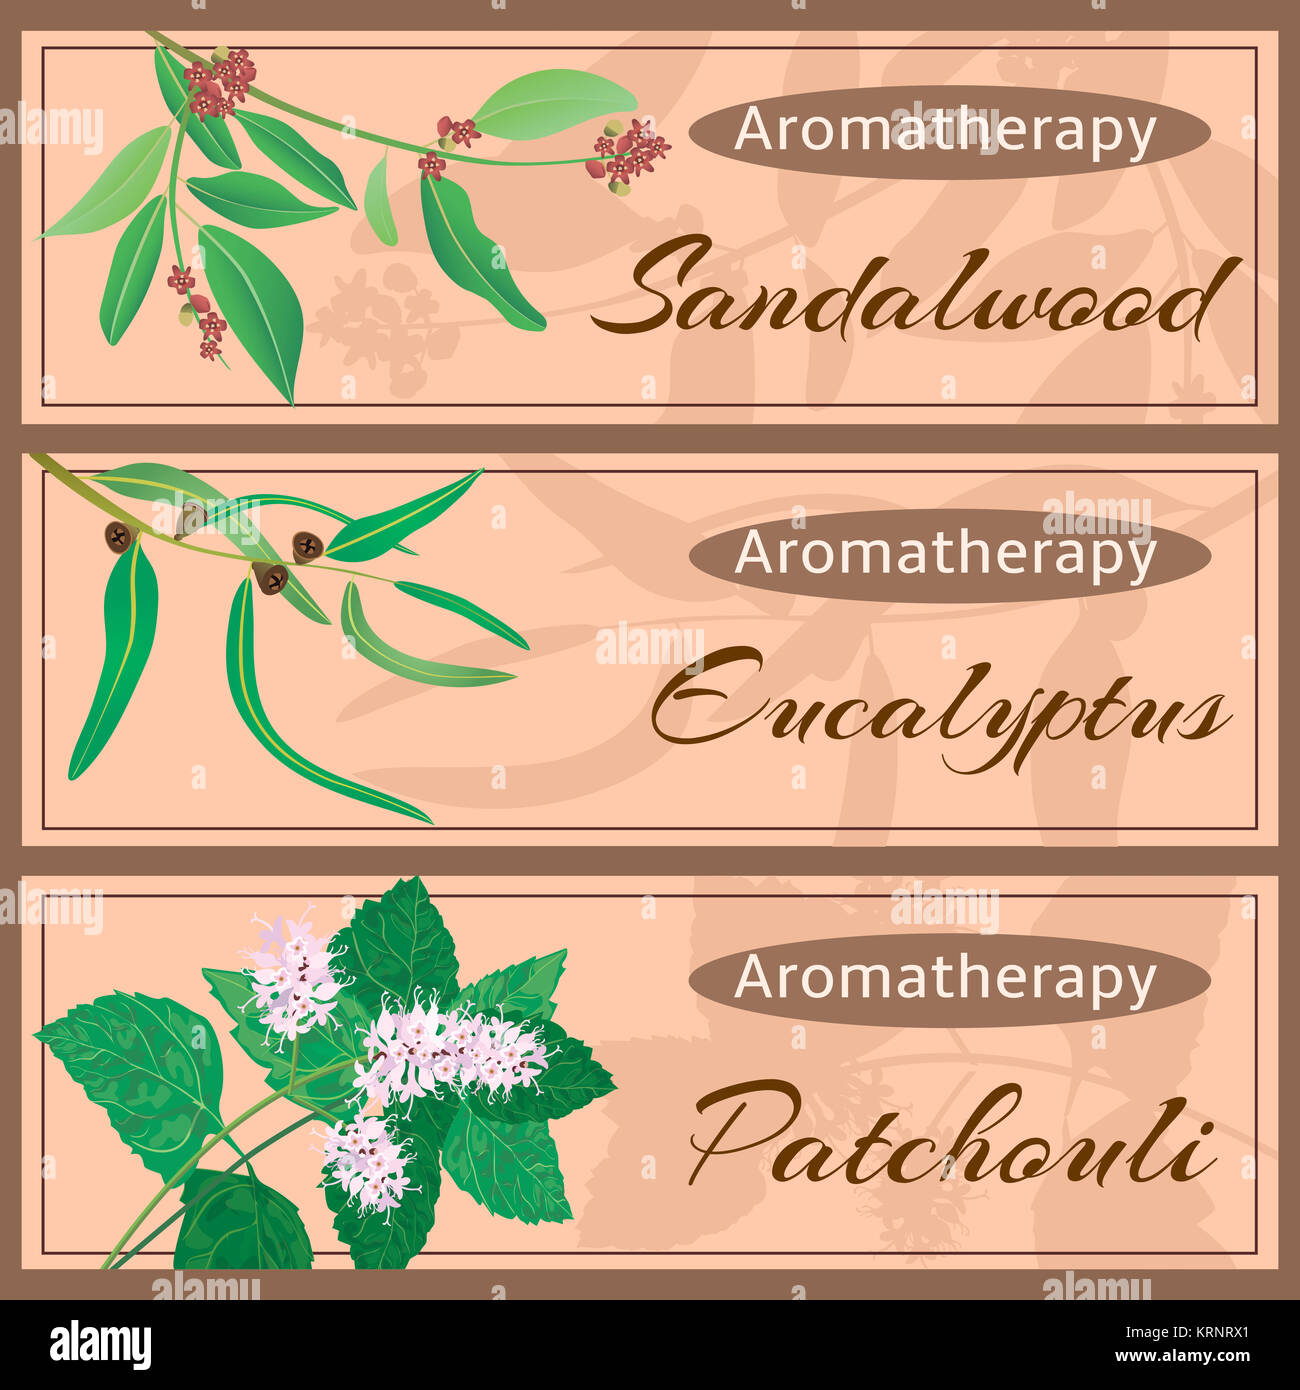 Aromatherapy set collection. Stock Photo